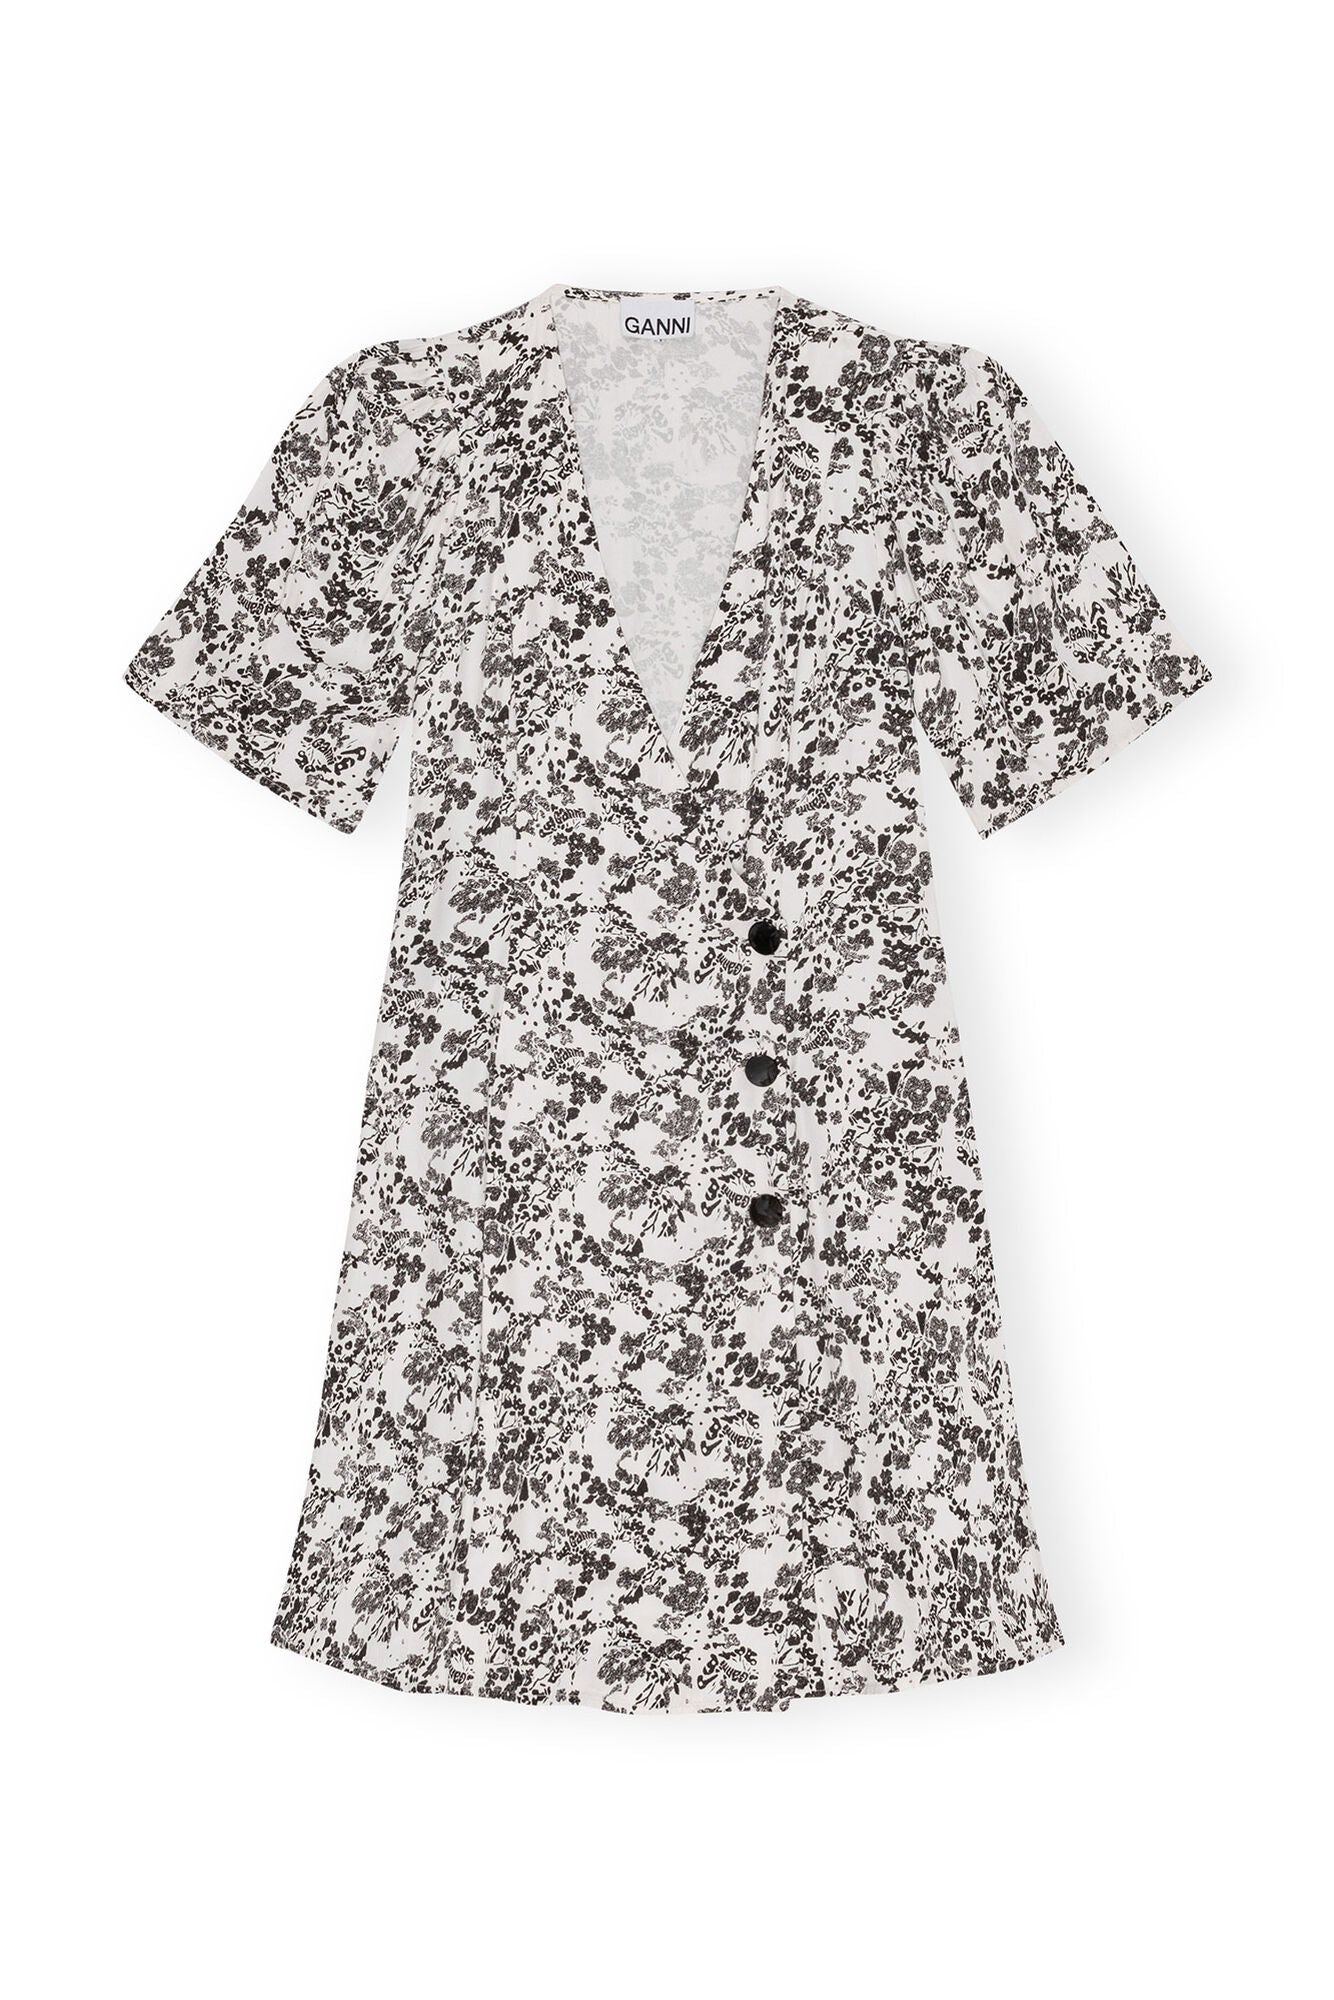 LEO BOUTIQUE Viscose Twill Wrap Mini Dress Egret Print GANNI